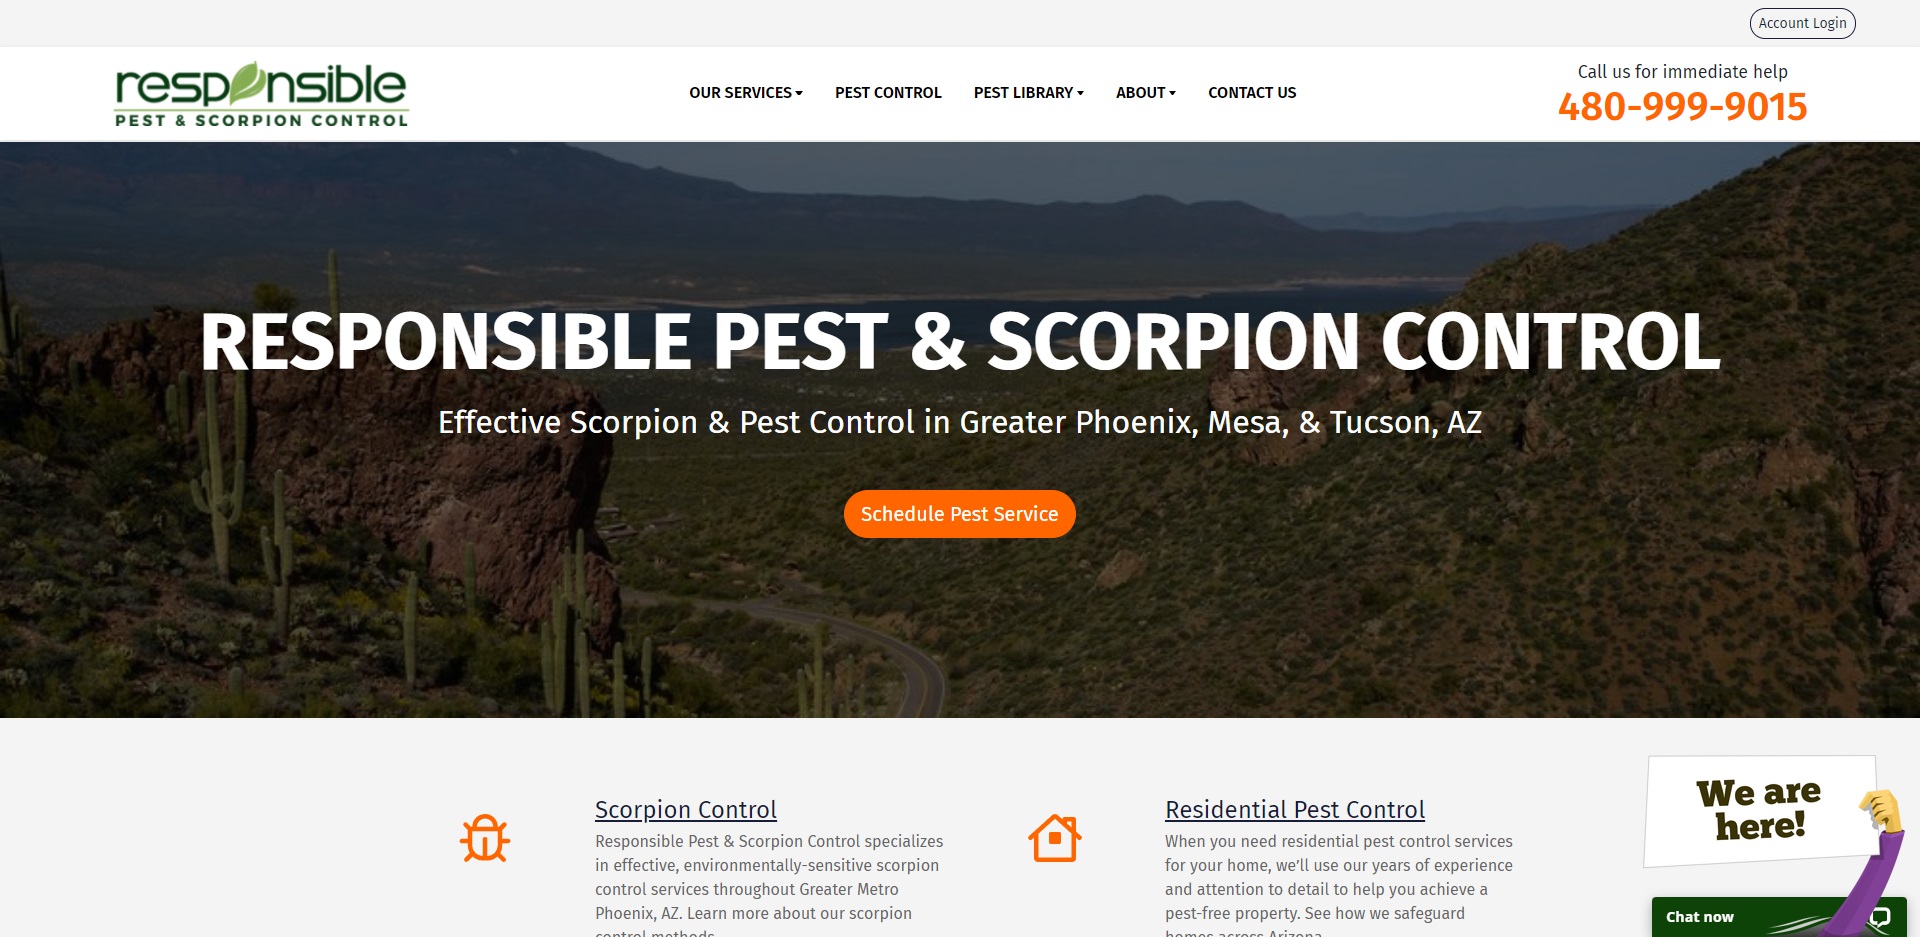 The Best Pest Control Companies in Mesa, AZ